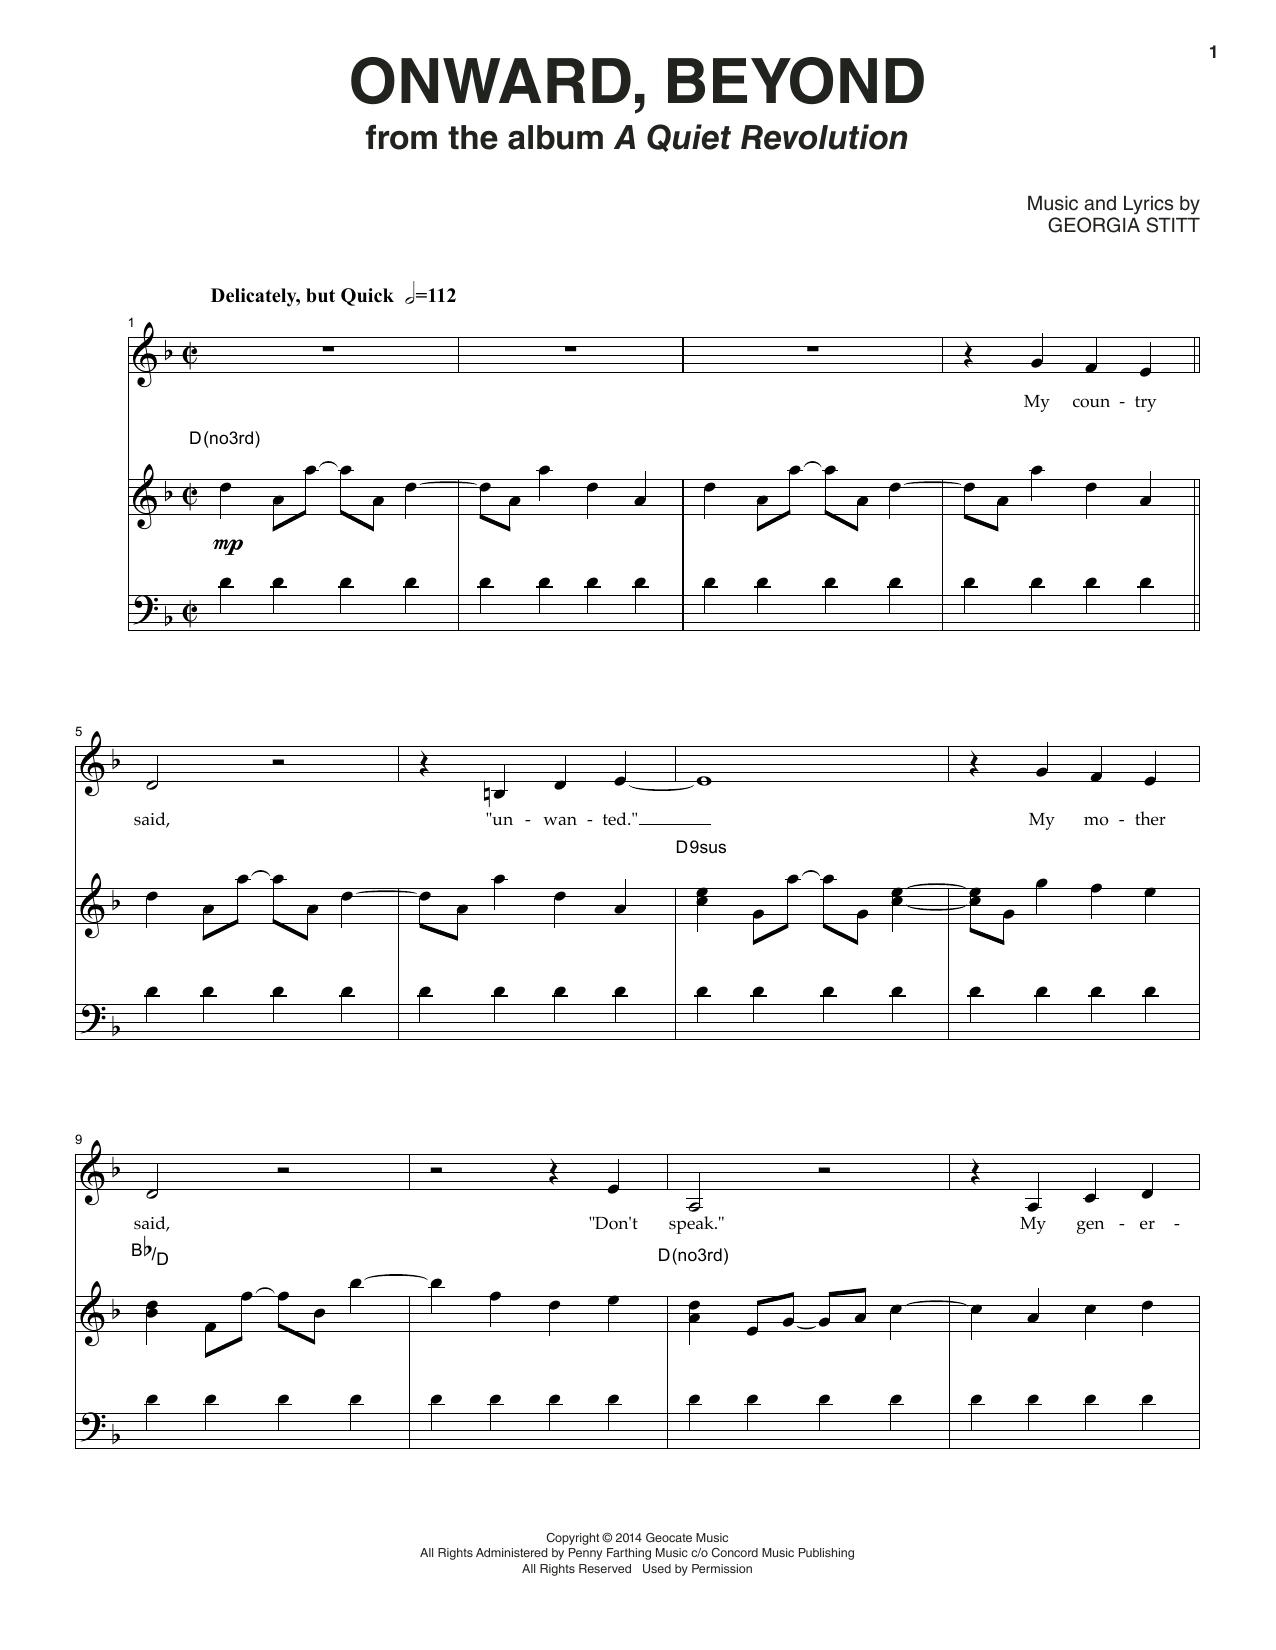 Georgia Stitt Onward, Beyond Sheet Music Notes & Chords for Piano & Vocal - Download or Print PDF